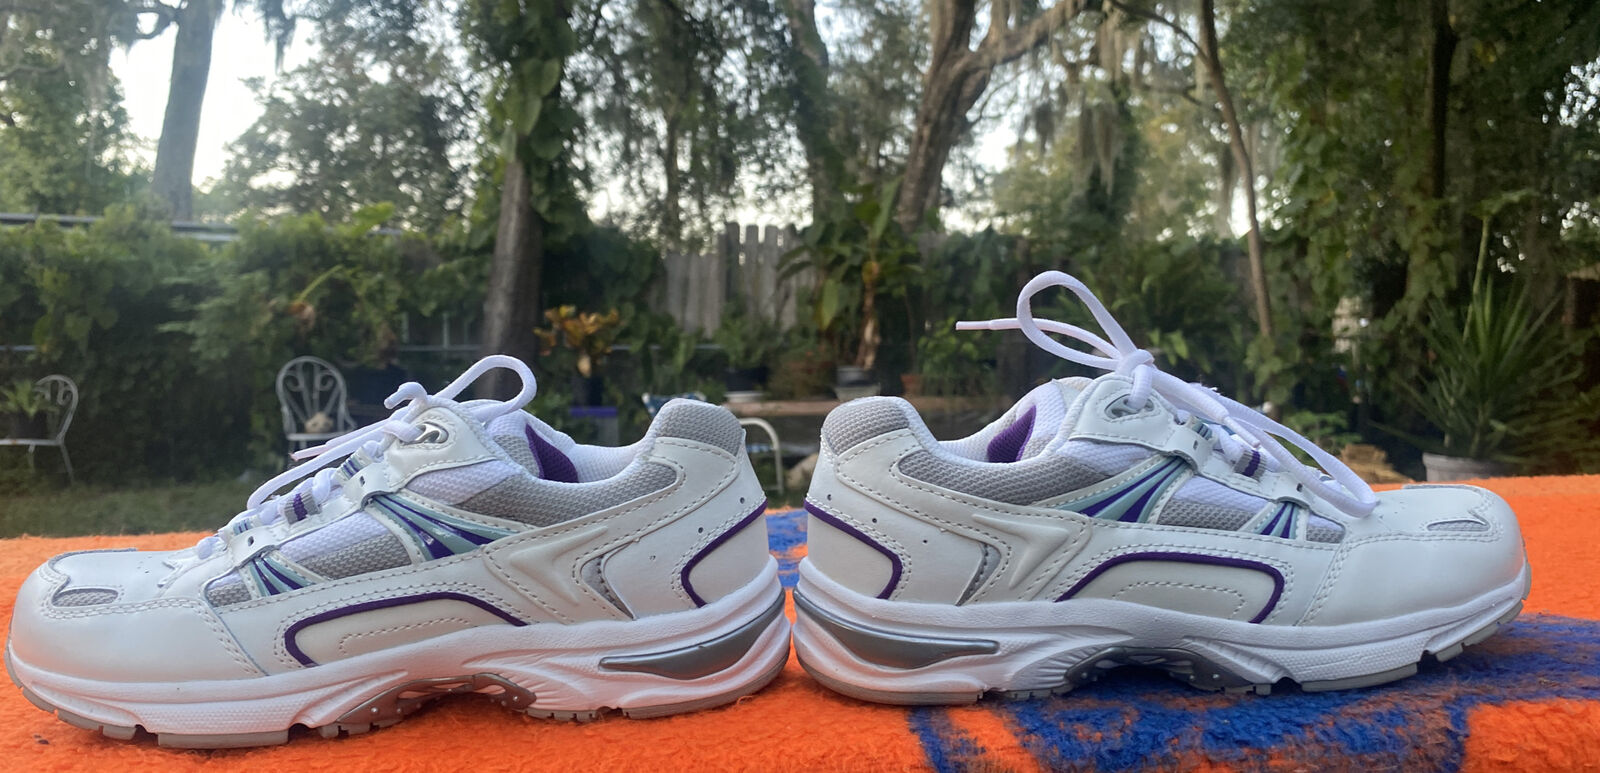 vionic walker womens shoes size 6.5 white/purple